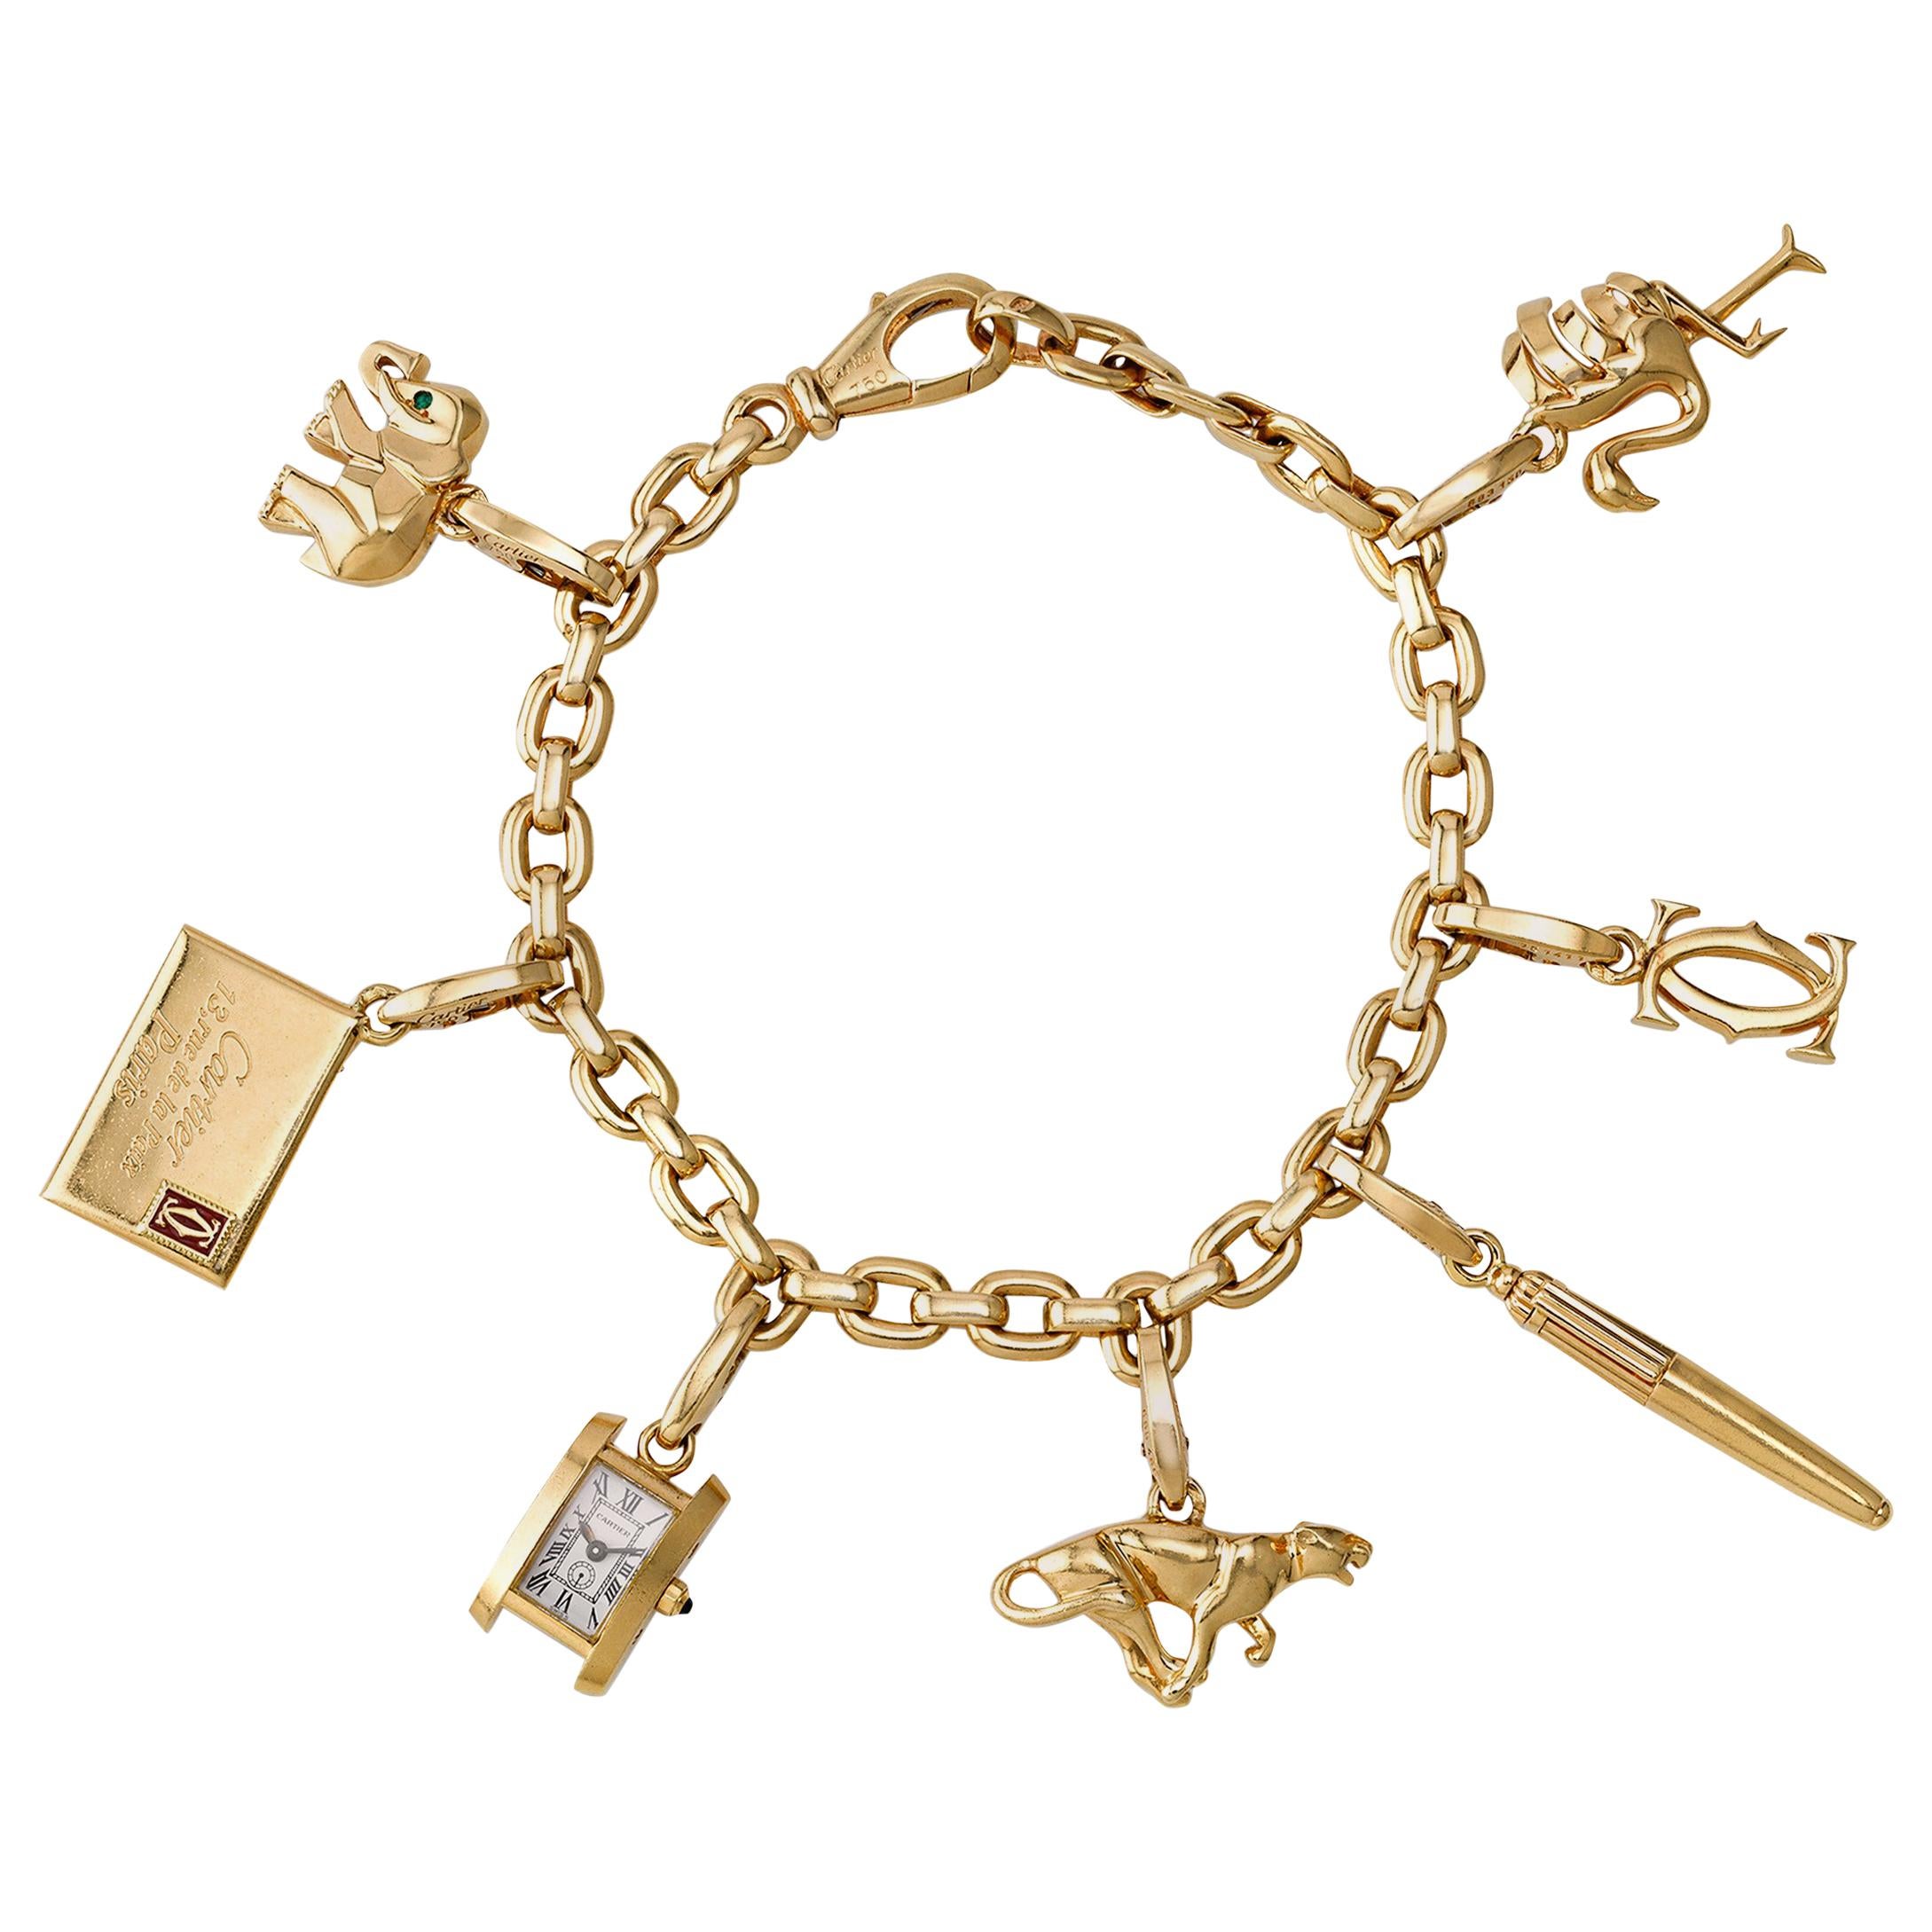 Cartier 18 Karat Gold Charm Bracelet